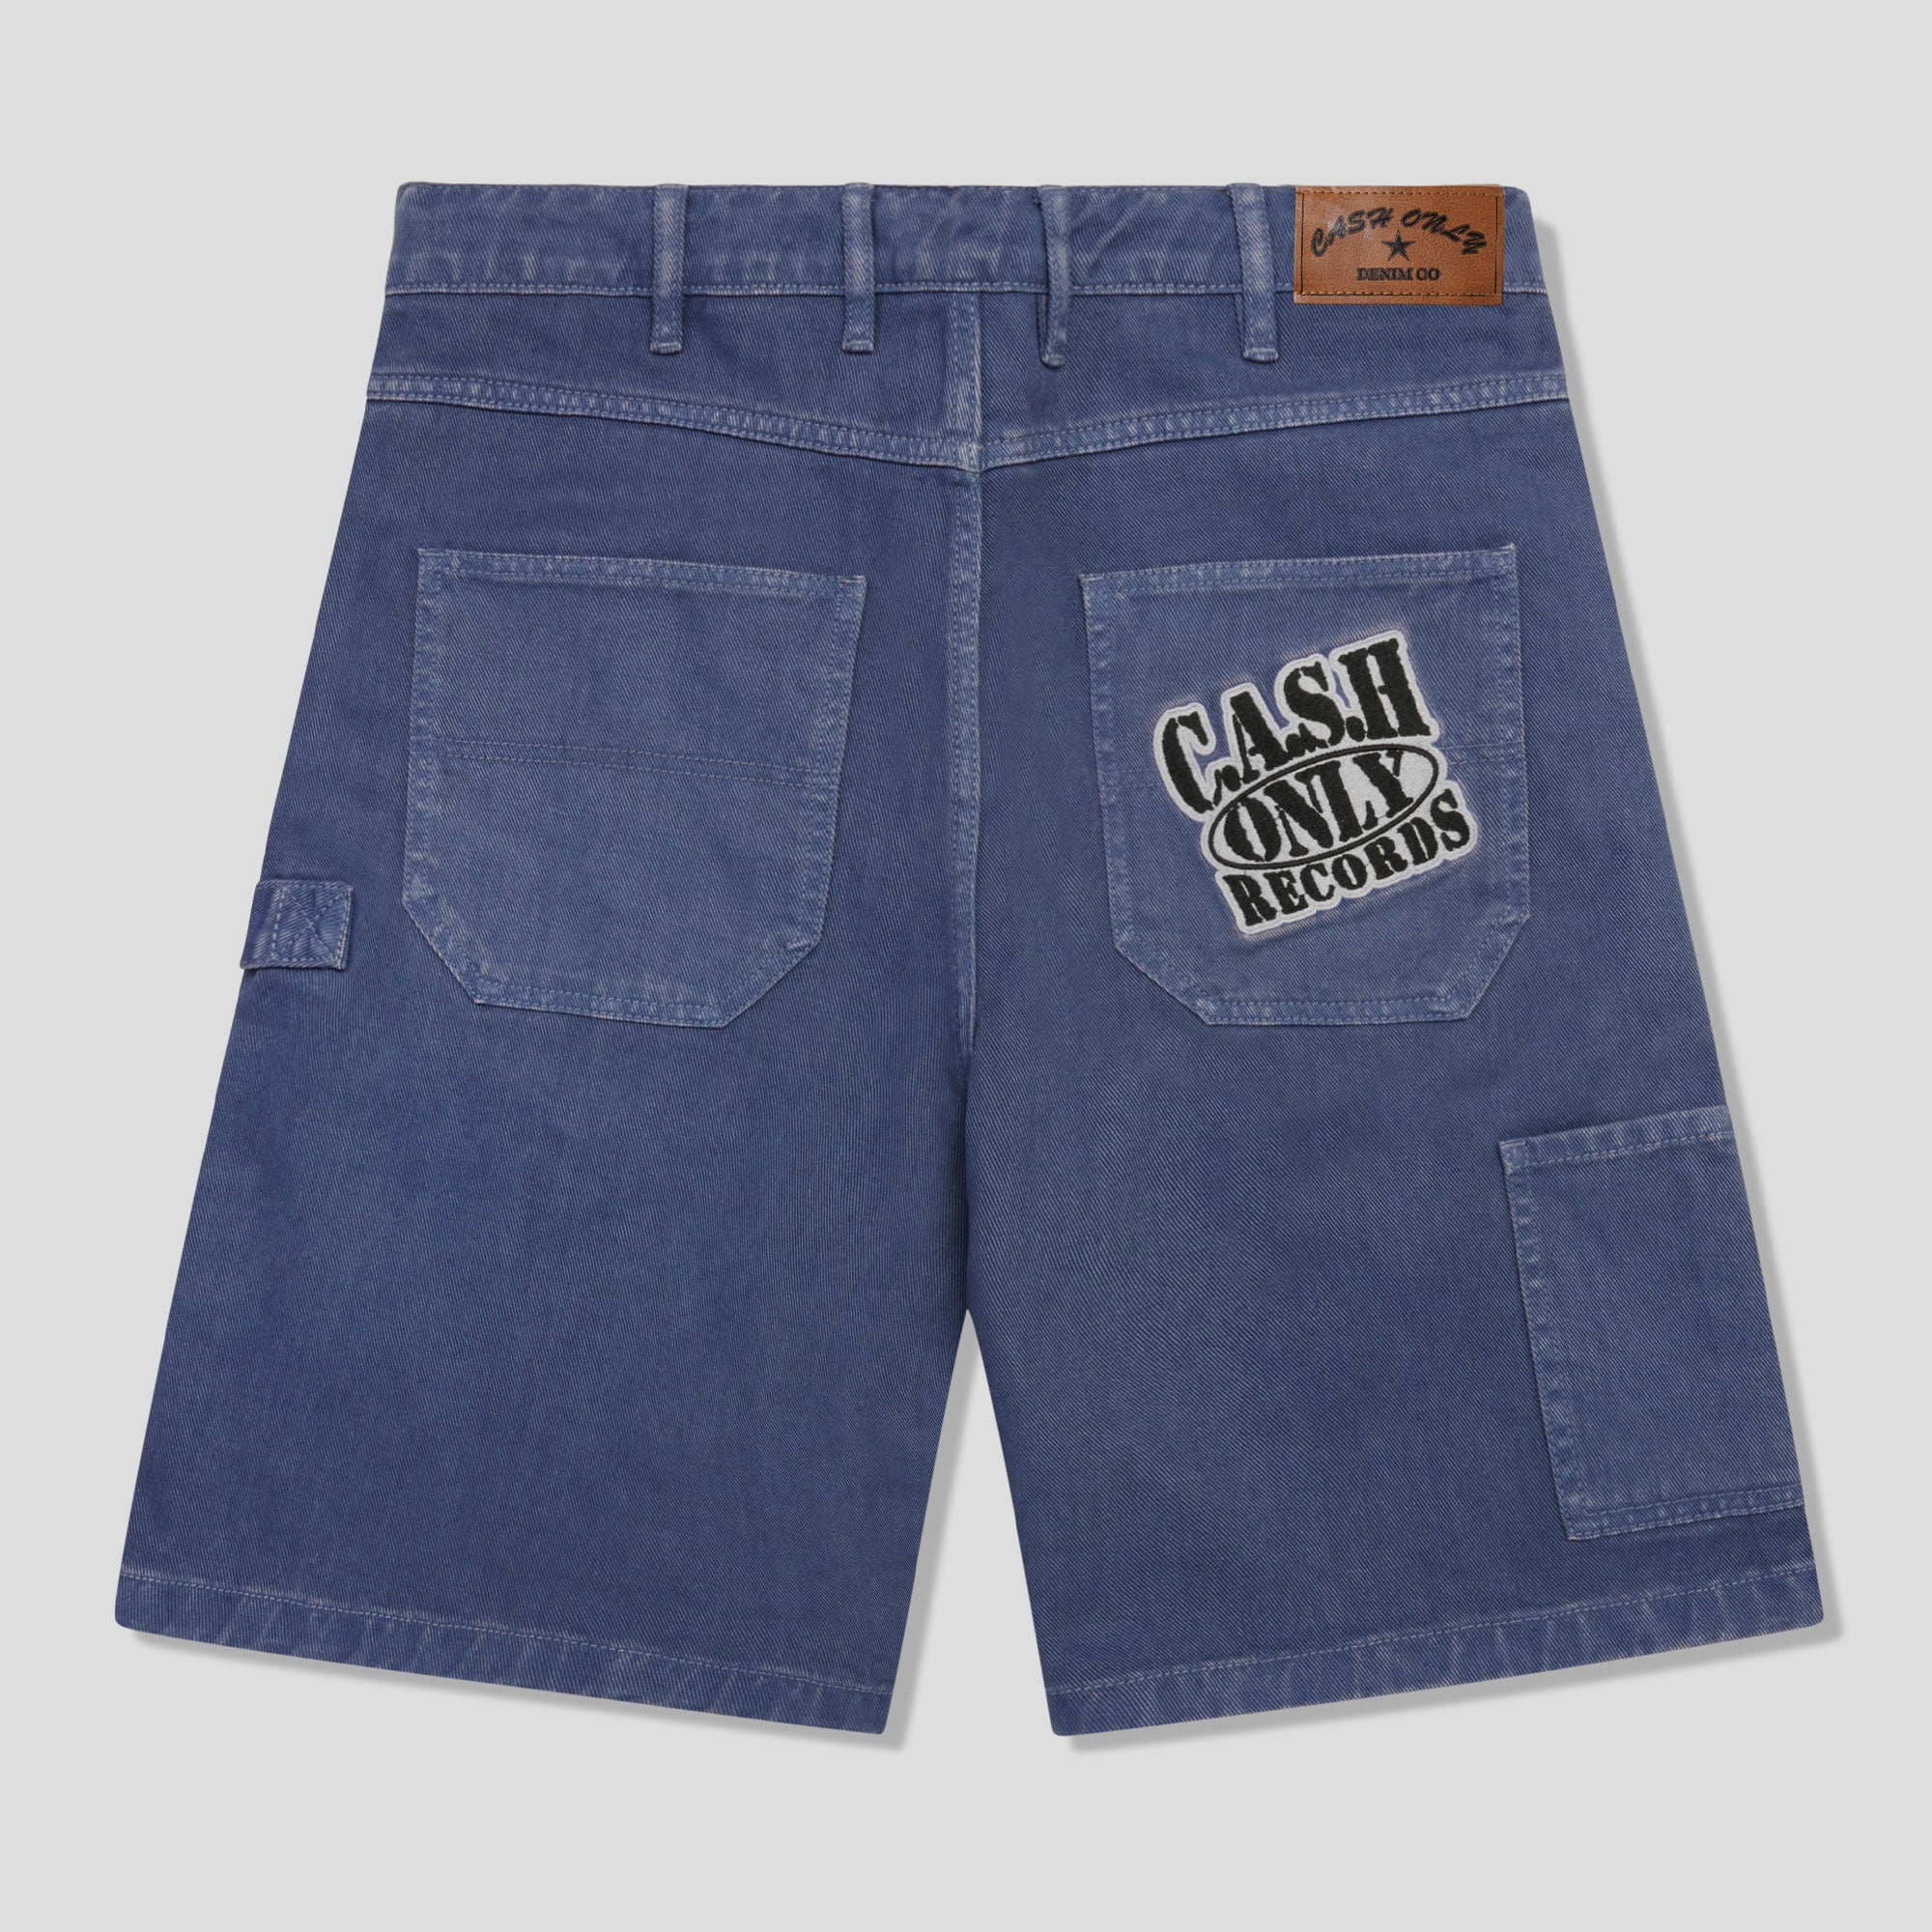 Cash Only Records Denim Shorts - Slate